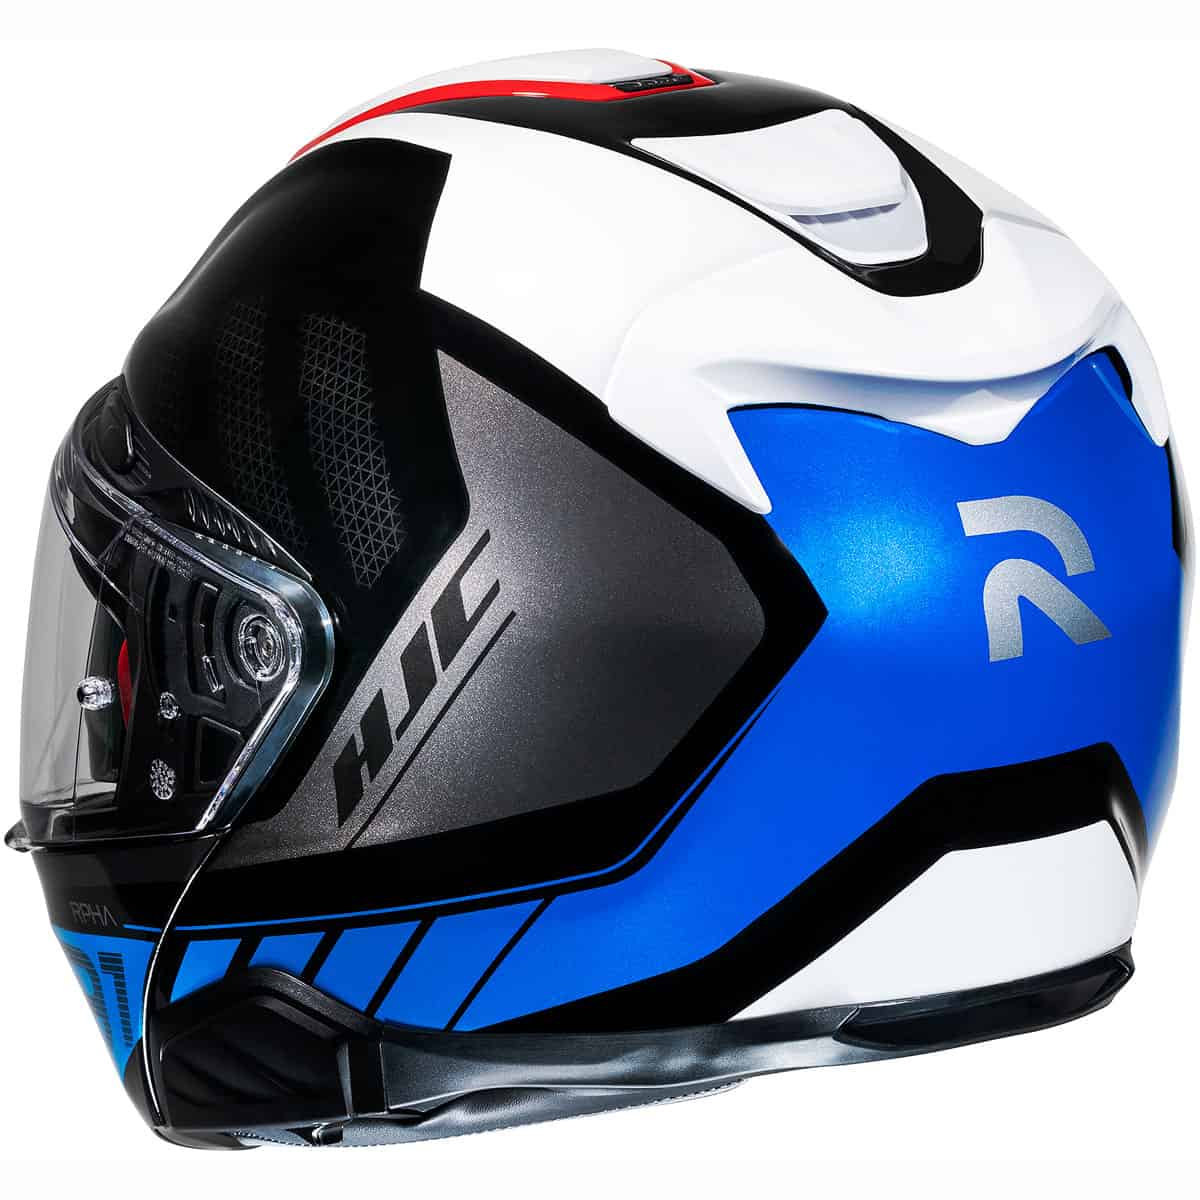 HJC RPHA 91: Premium flip-up touring motorcycle helmet rafino red white blue 2